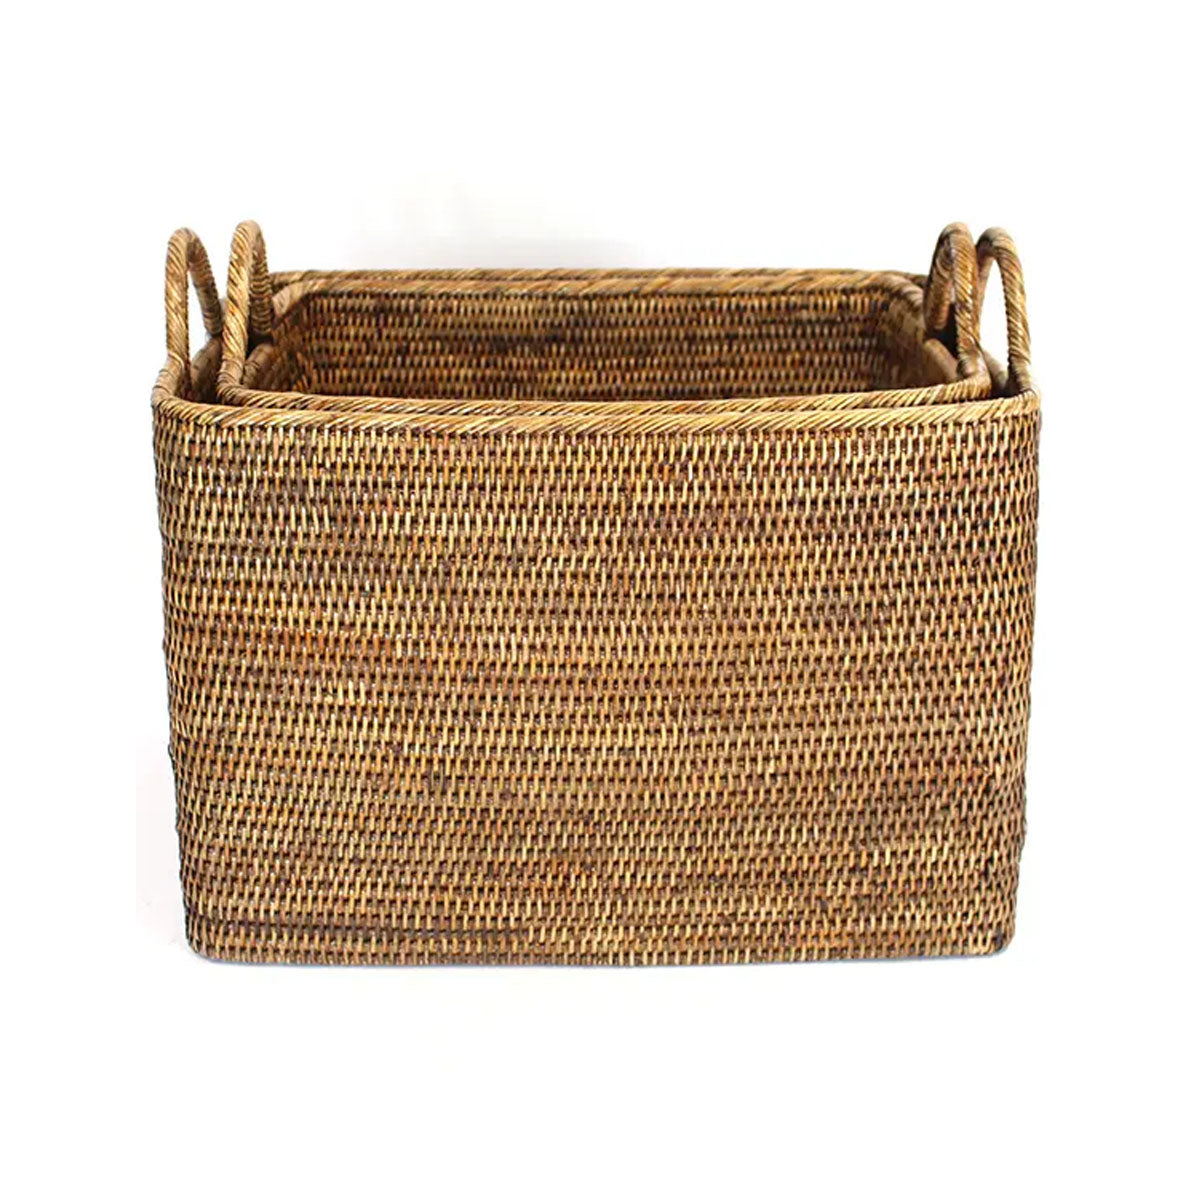 Woven Antique Brown Basket